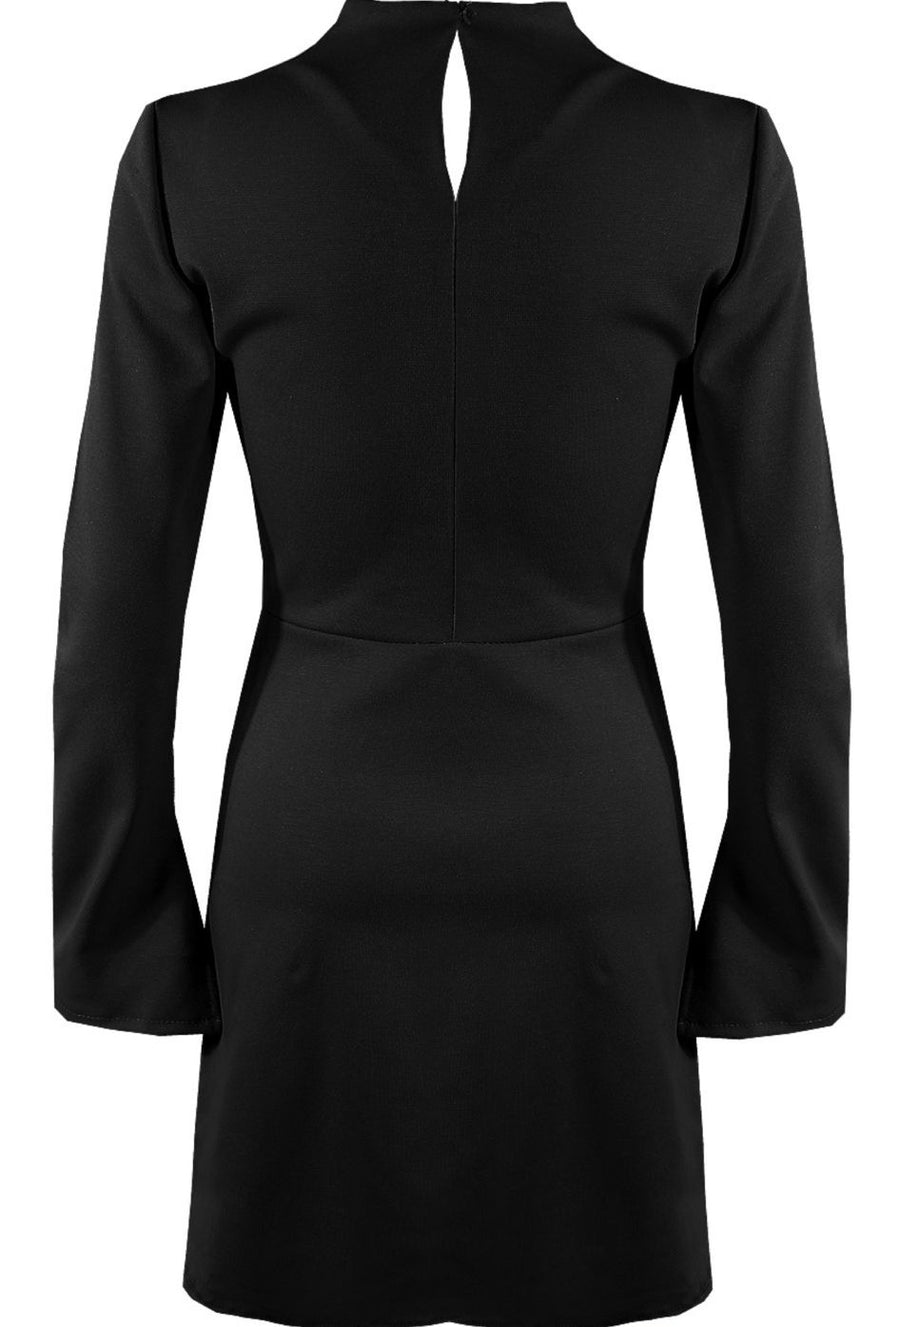 High Neck Shift Mini Dress With Open Cuffs - Black